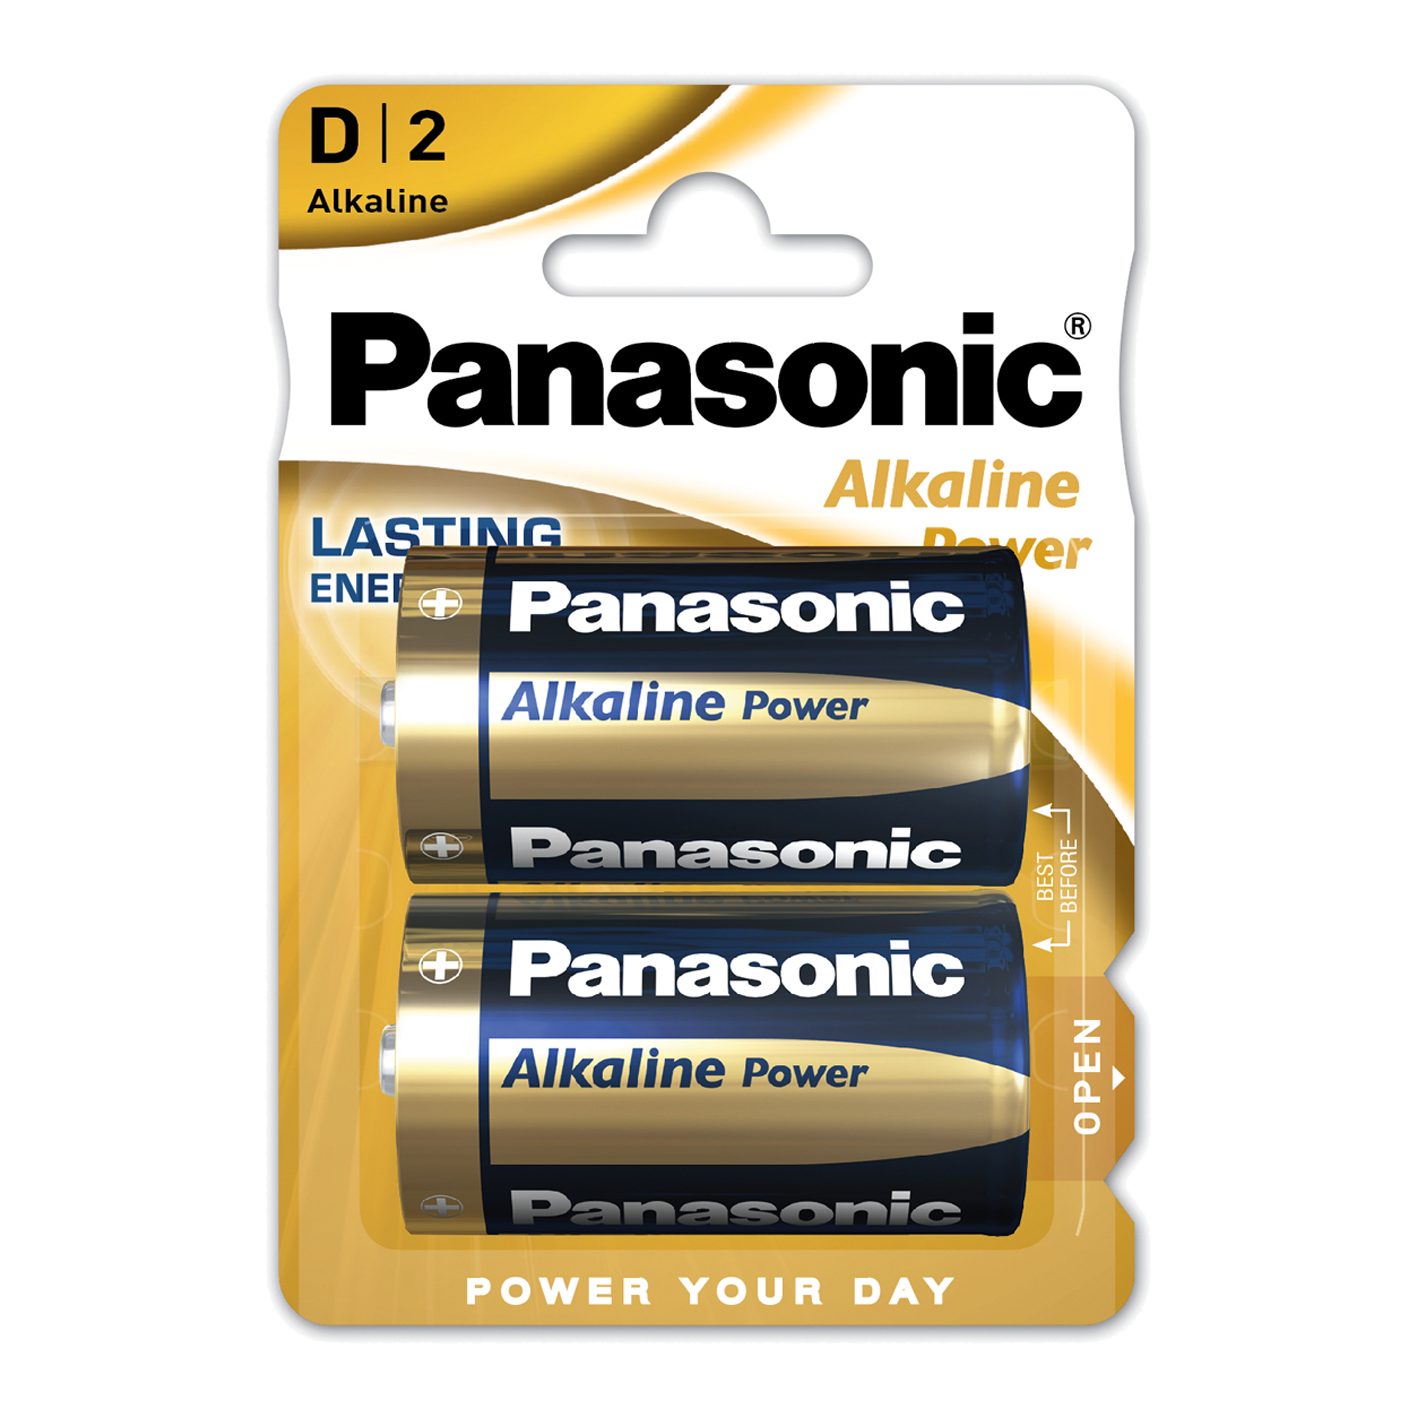 Panasonic energía alcalina tamaño D, paquete de 2